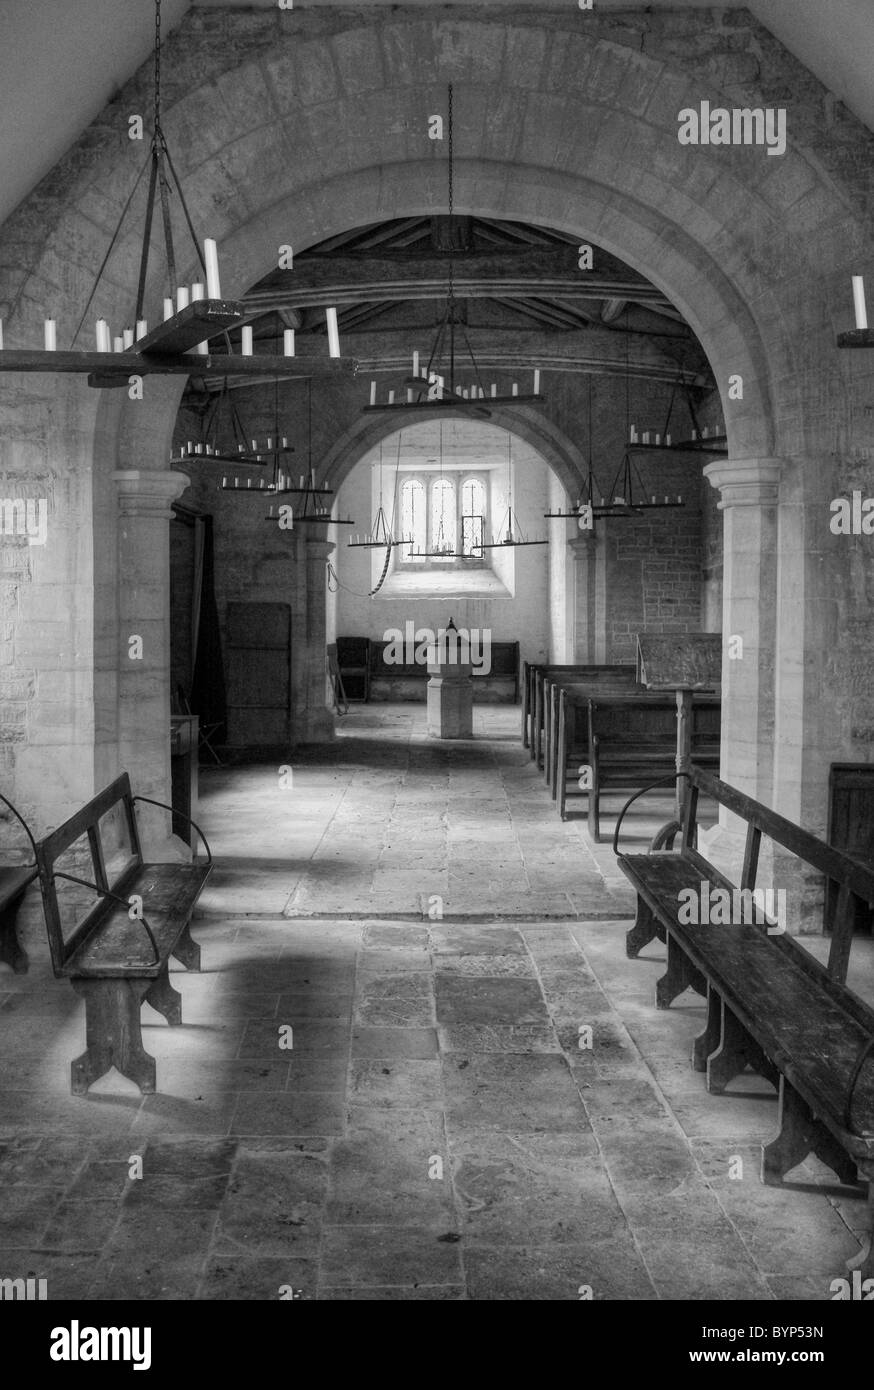 The interior of St Bartholemew 's church in the village of Furtho, Northamptonshire, UK Stock Photo